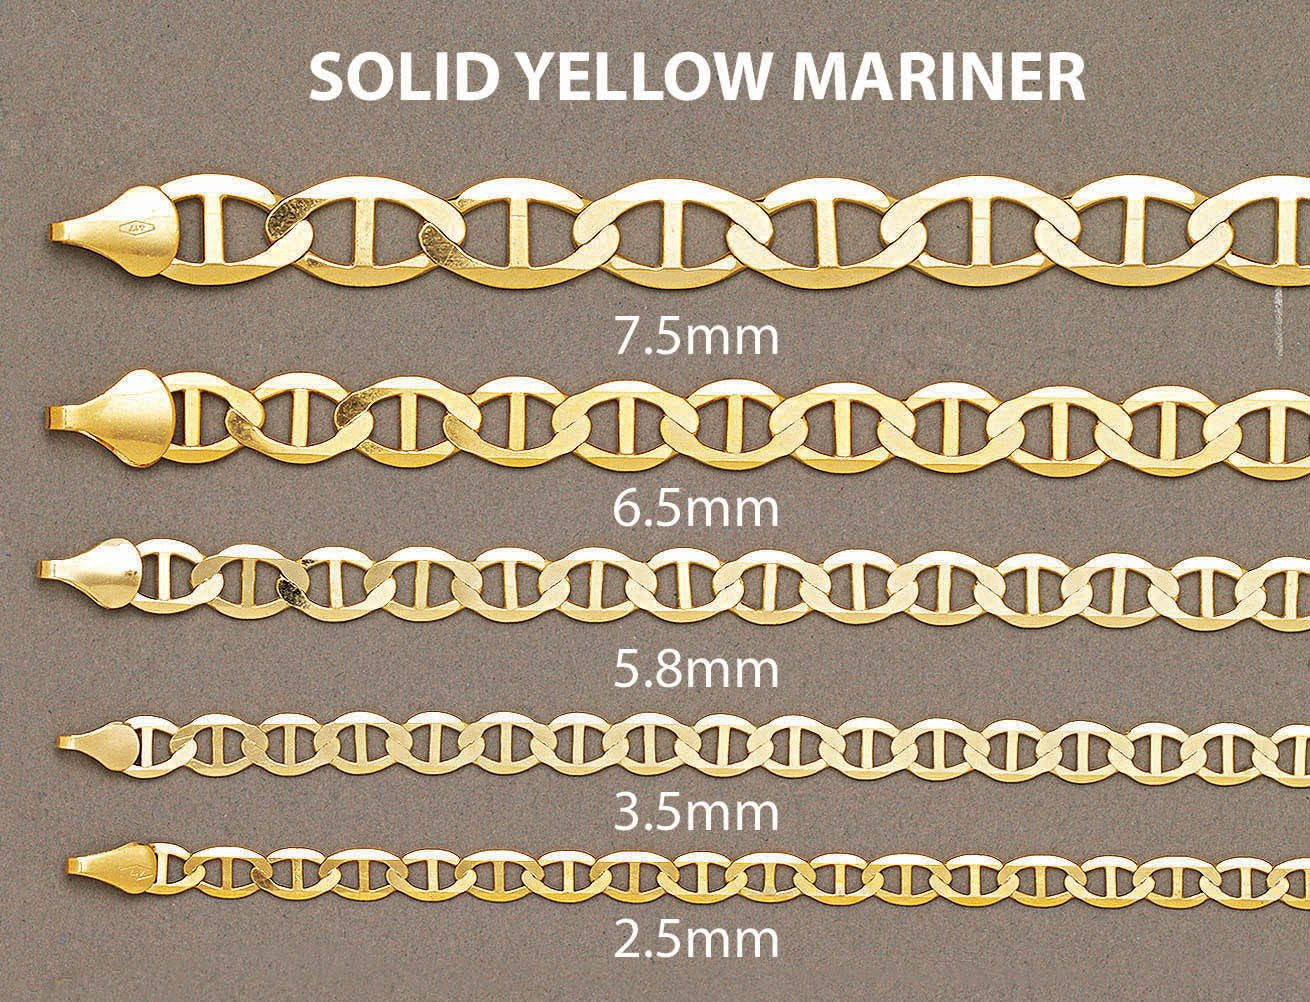 14k Yellow Solid Mariner Chain